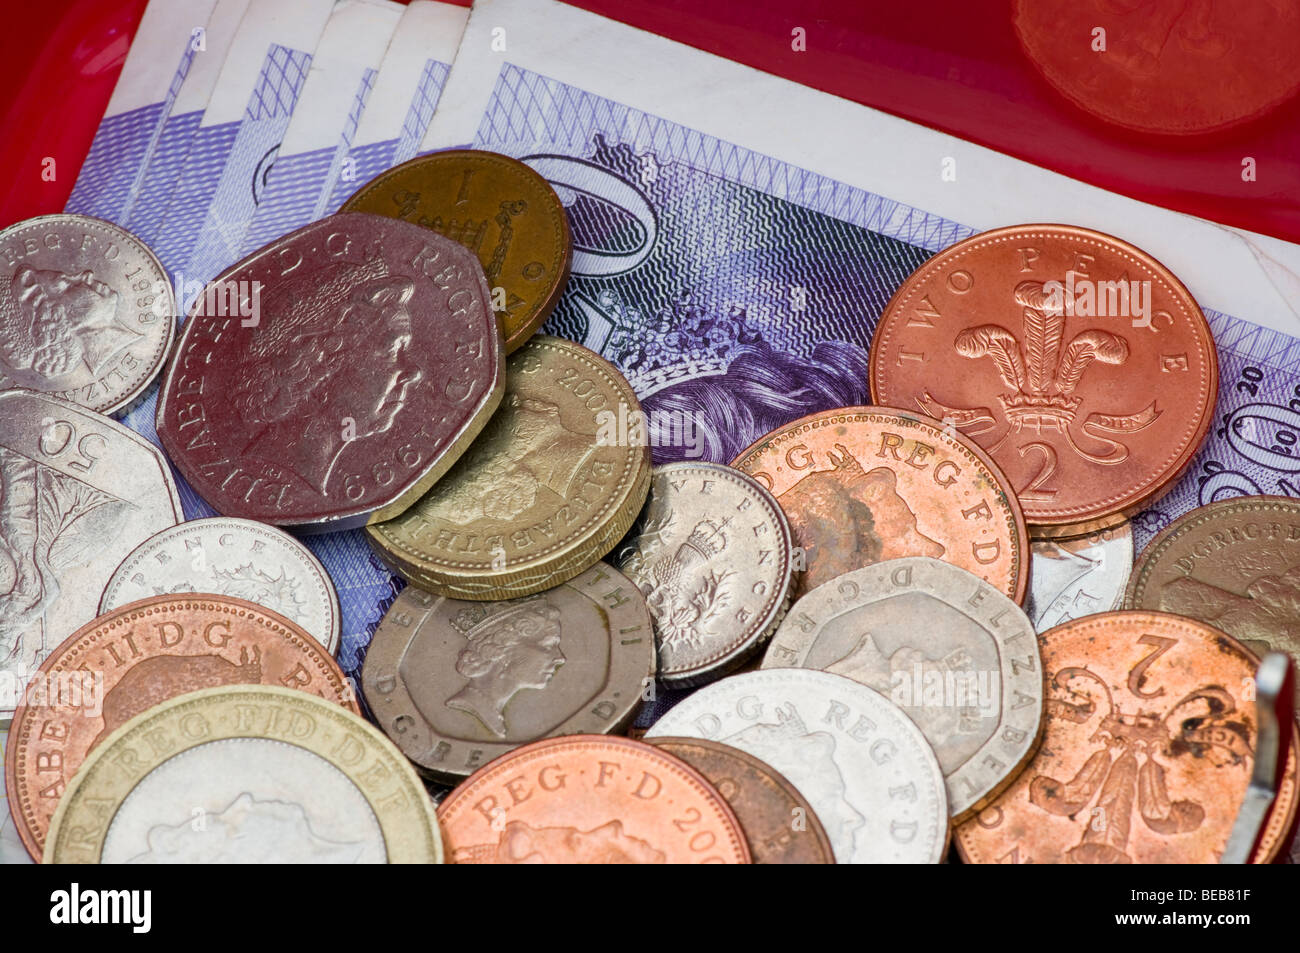 British Coins and Twenty Pound Notes Stock Photo